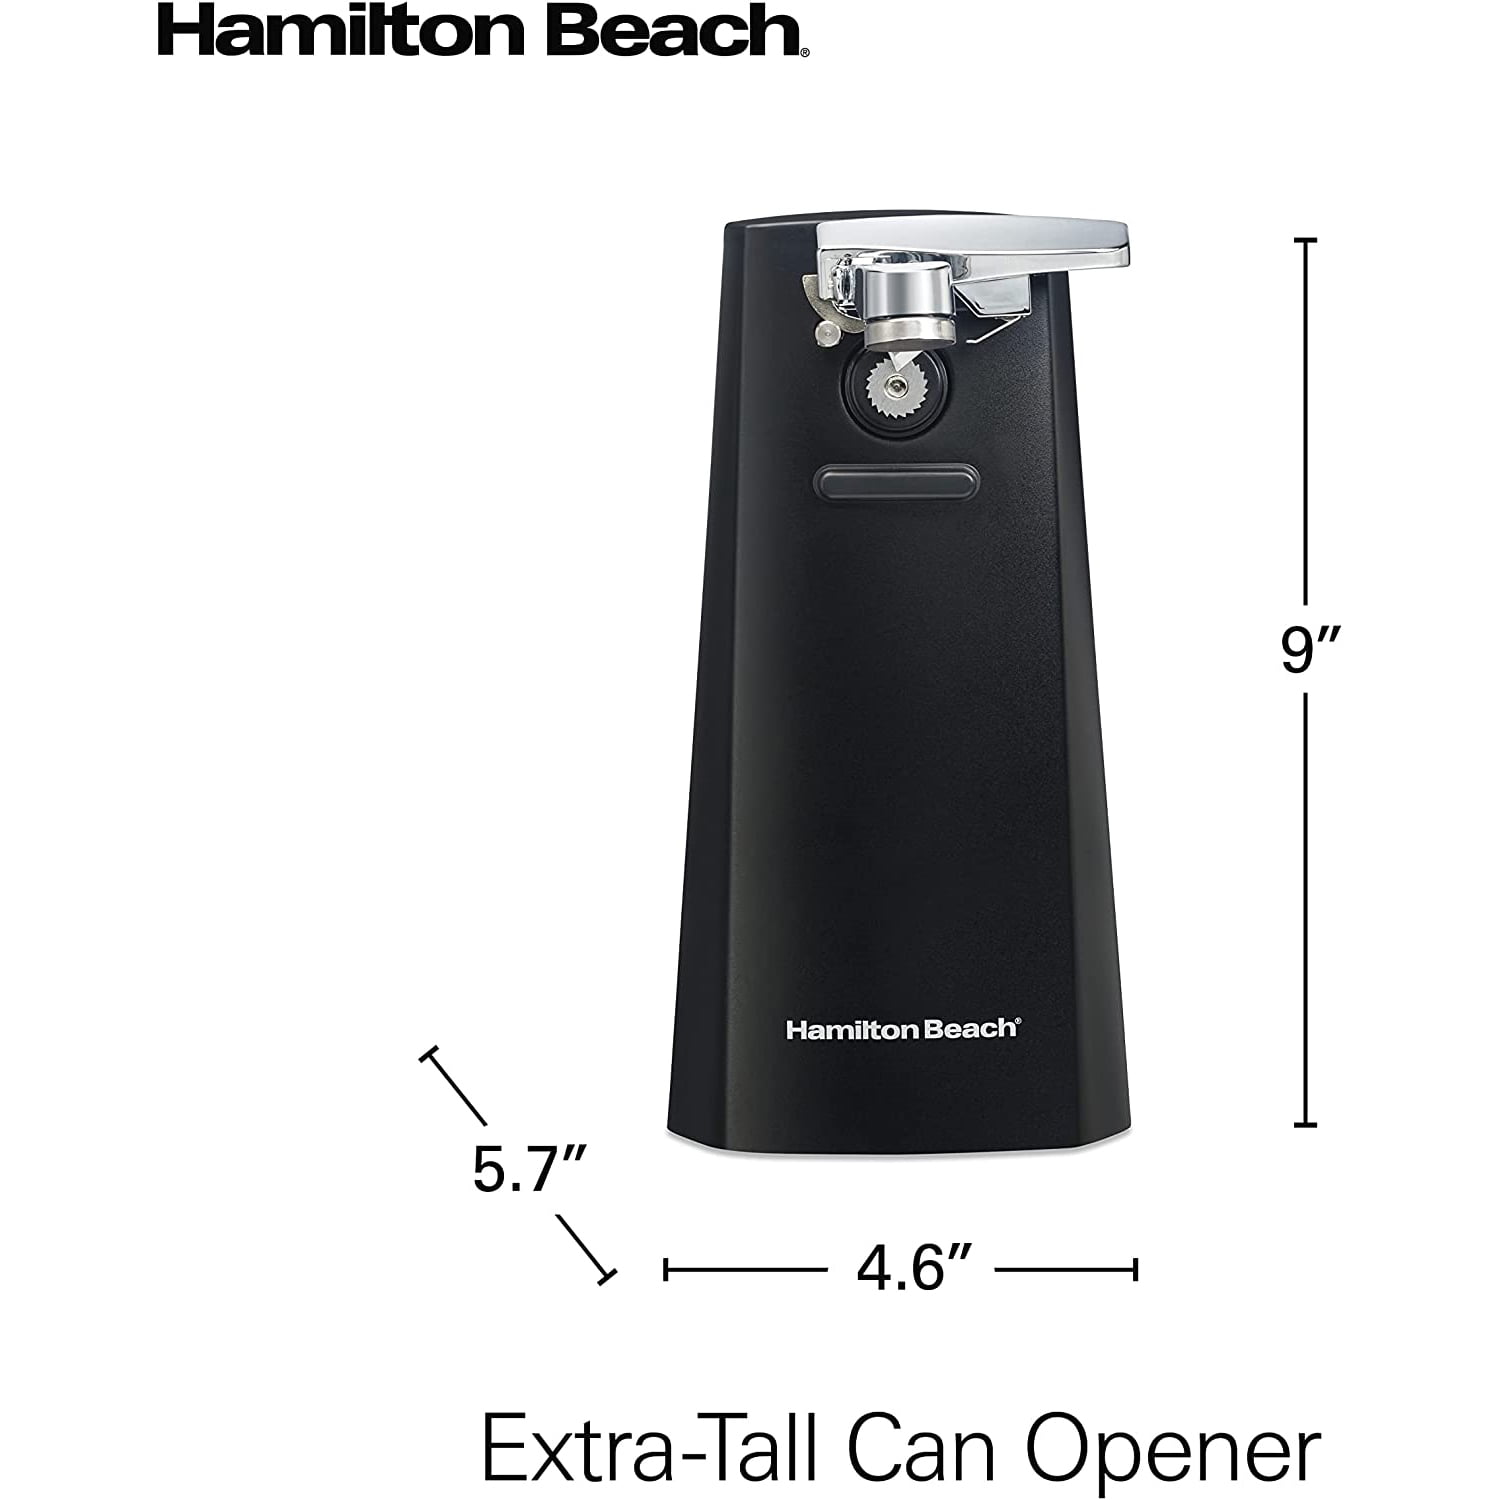 Hamilton Beach® Classic Chrome Extra-Tall Can Opener